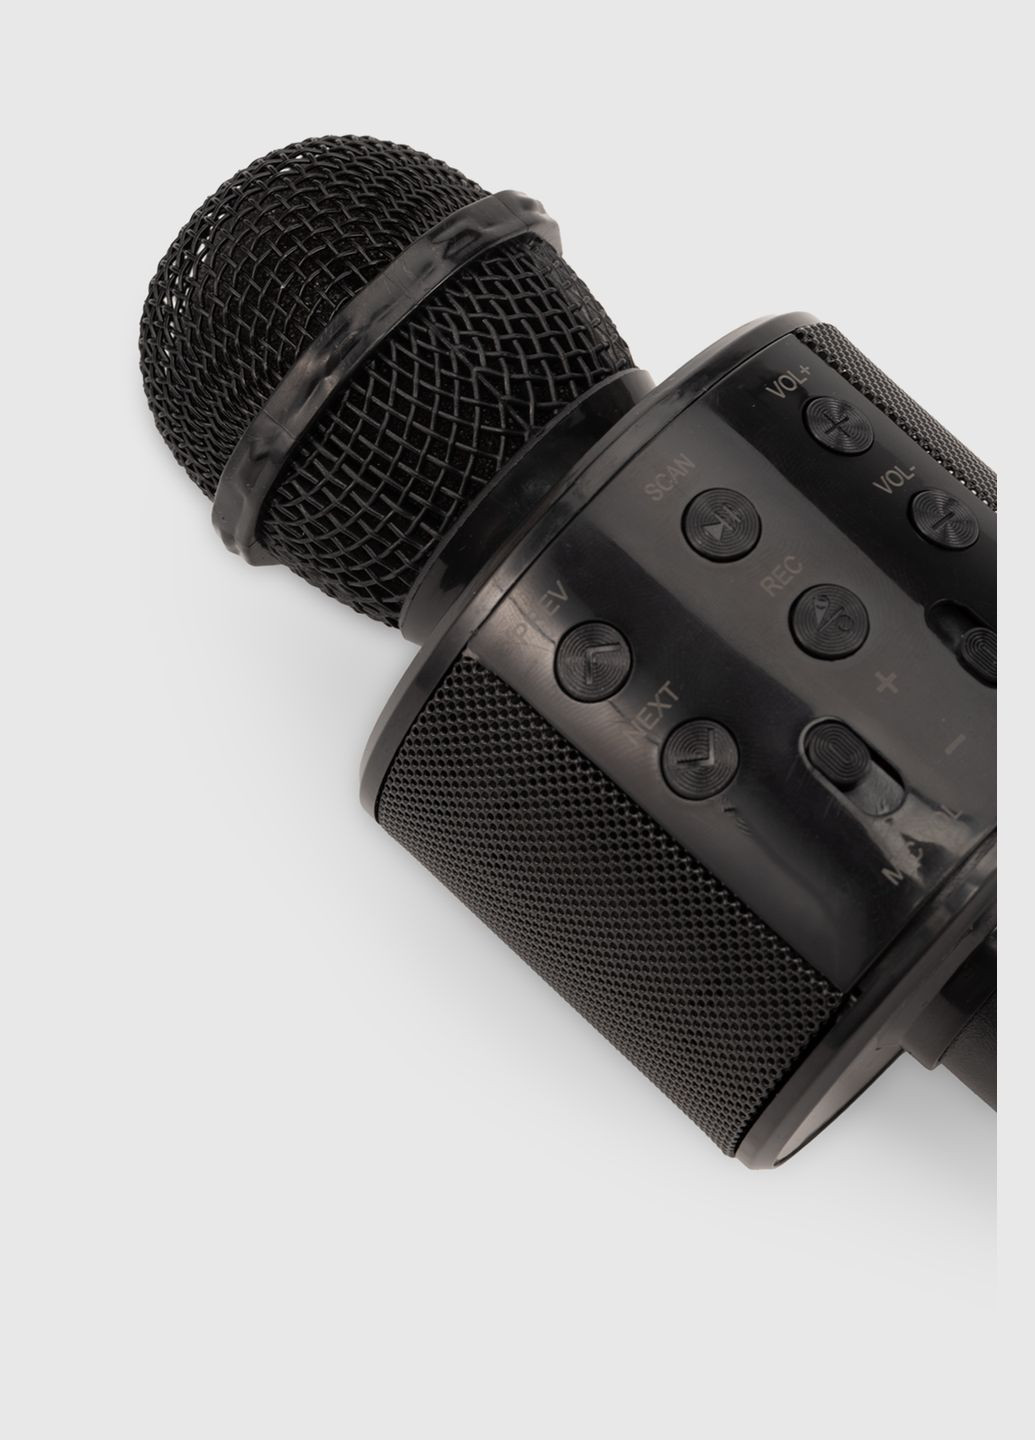 Бездротовий караоке мікрофон з Bluetooth 858 No Brand (286845059)